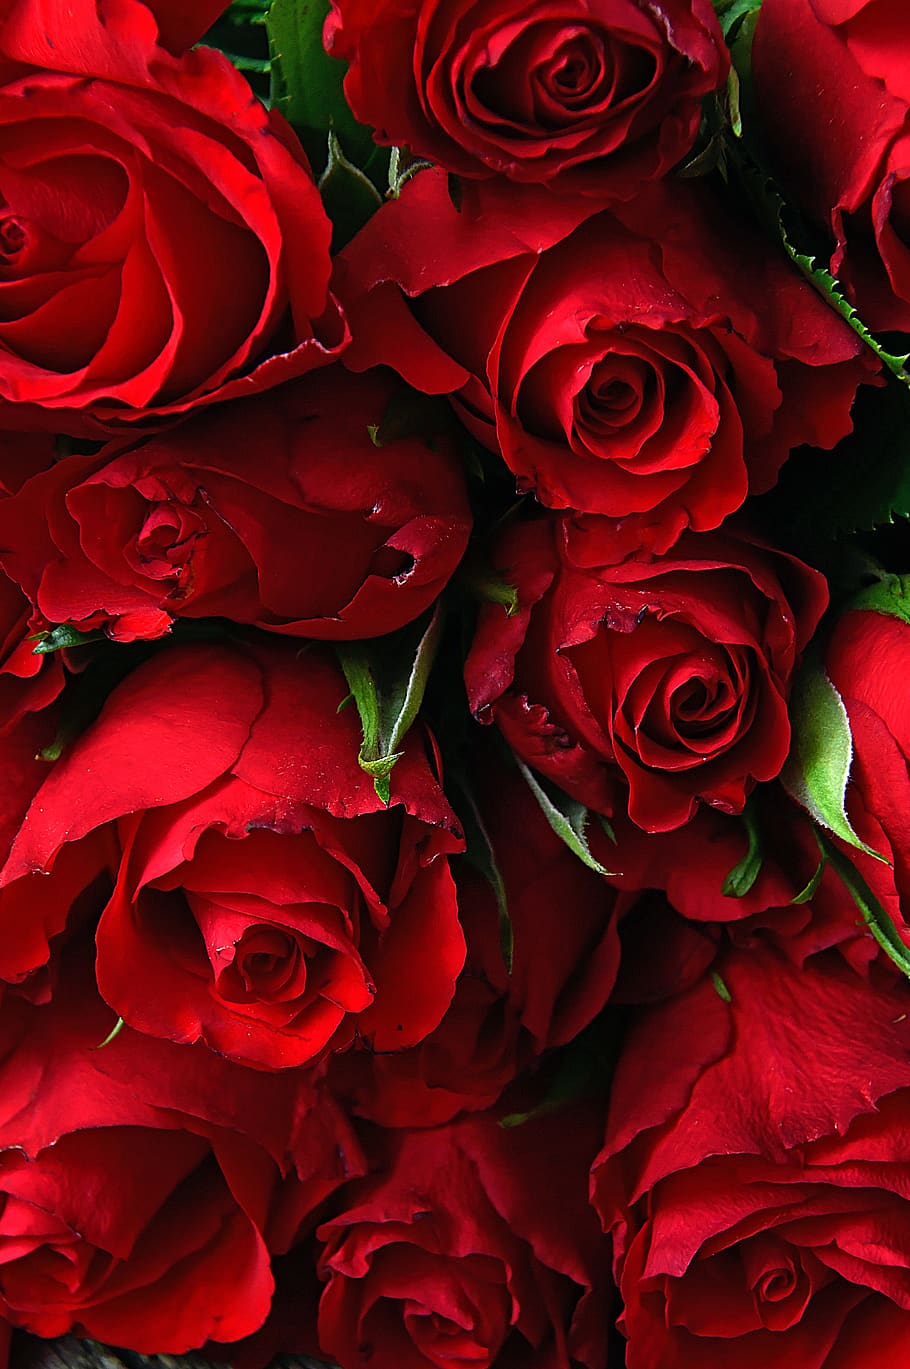 mawar, valentine, hari valentine, romantis, roman, cinta, baik, wallpaper, bunga, simbol